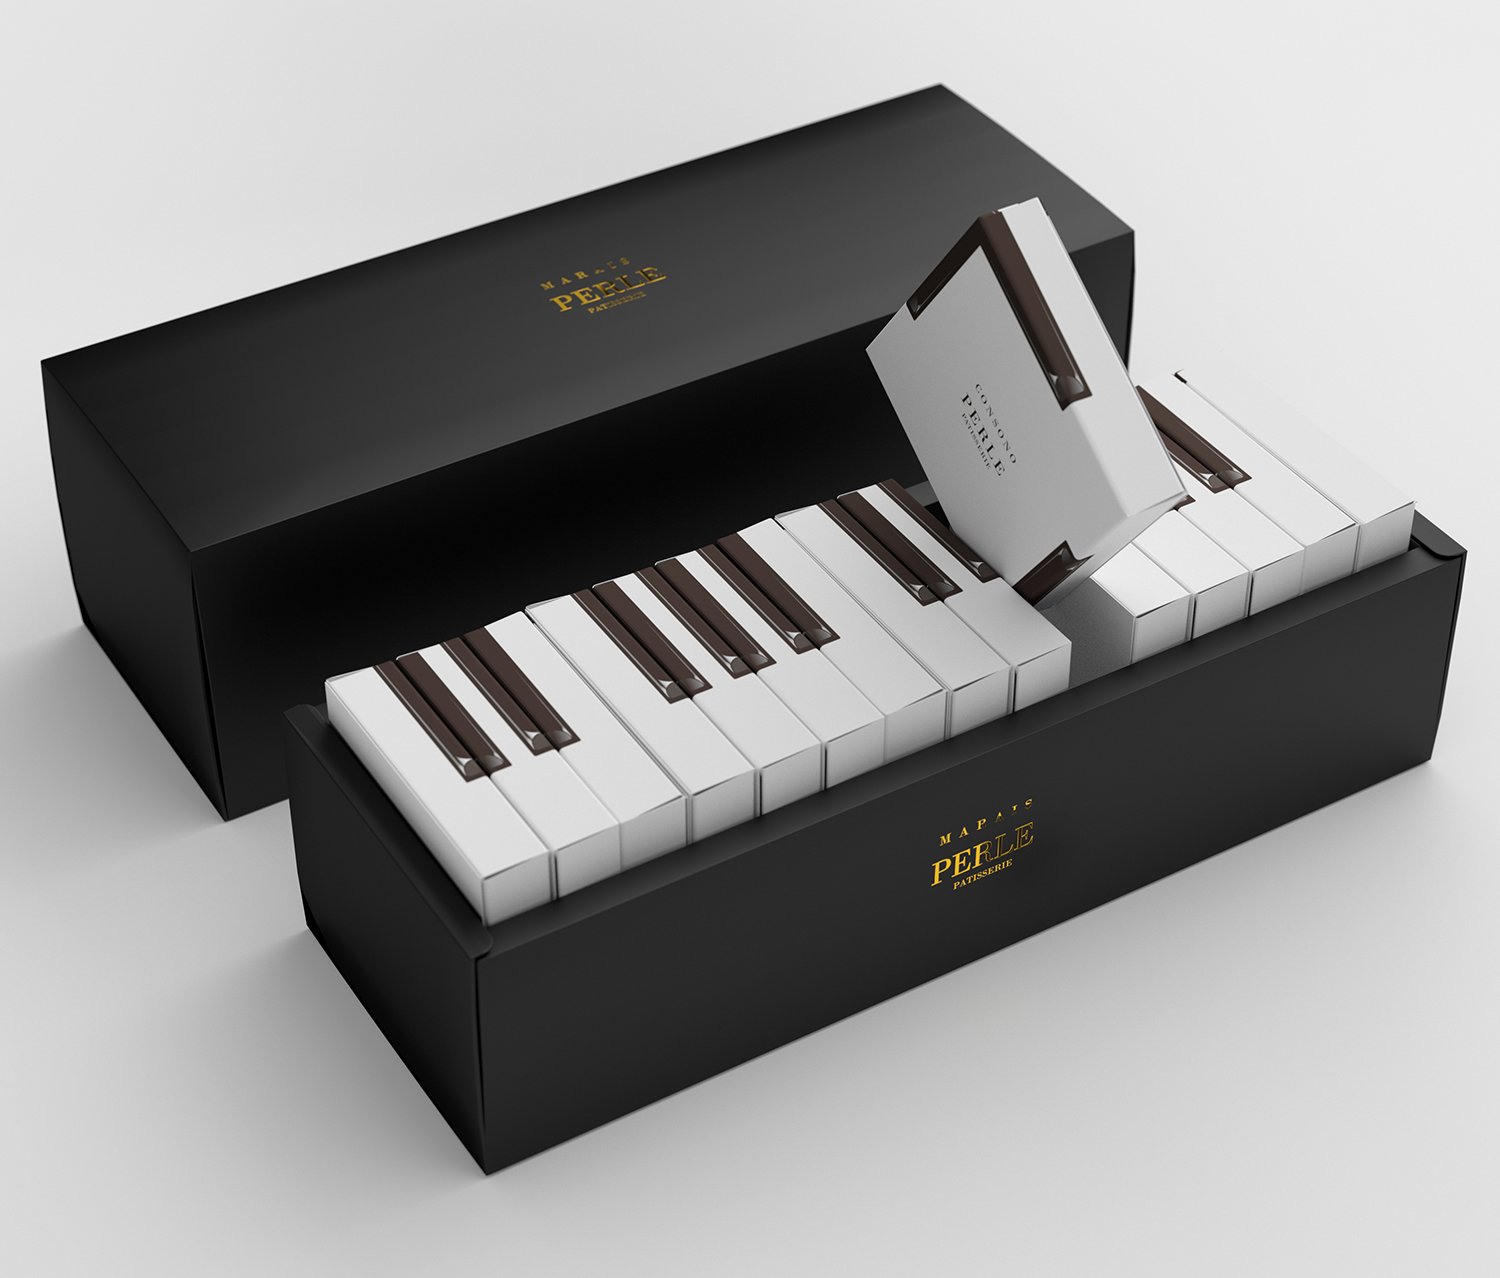  Marais Piano cake packaging by Kazuaki Kawahara